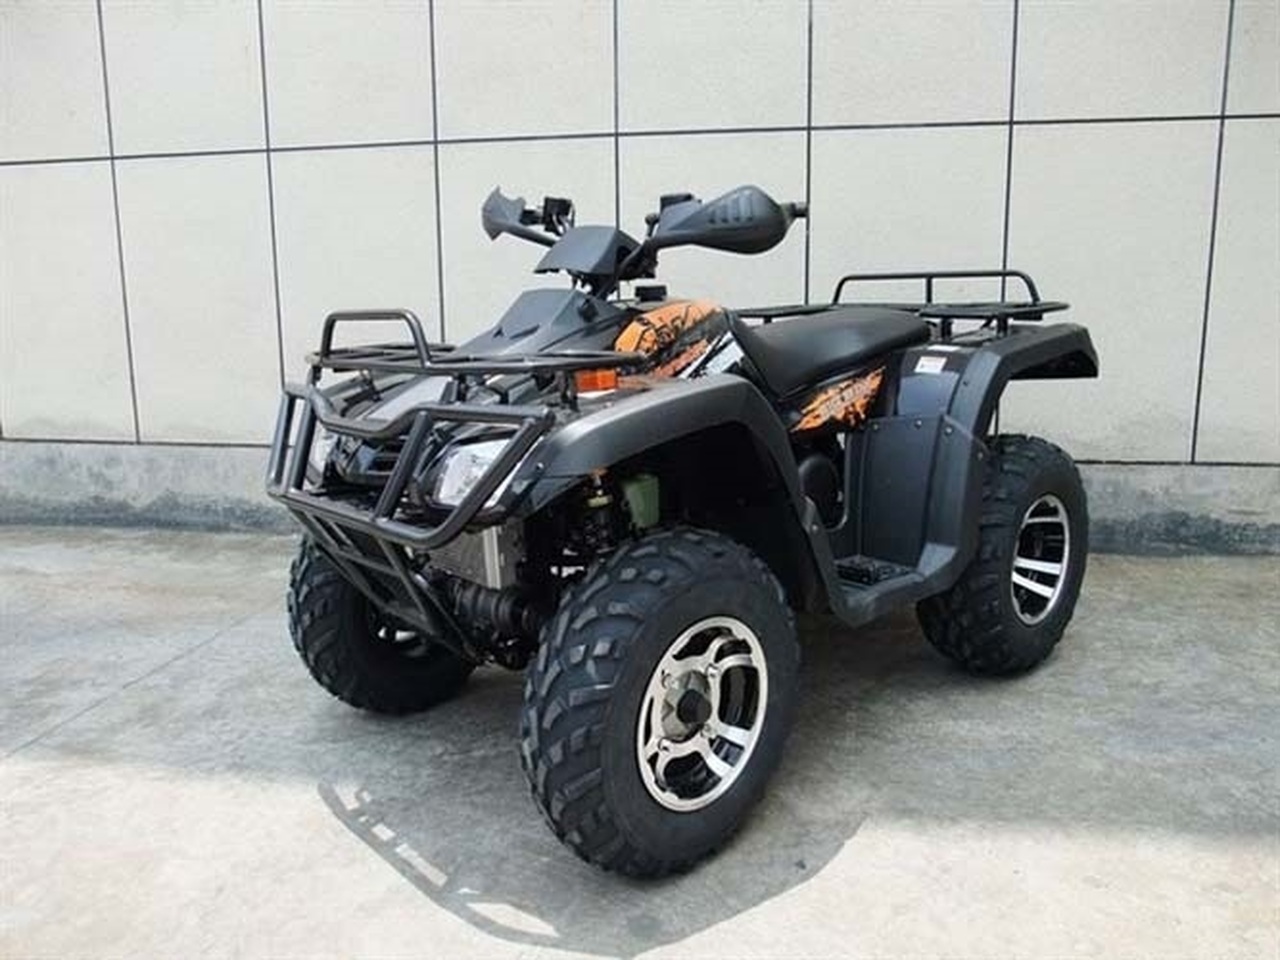 Vitacci Monster 300 cc ATV